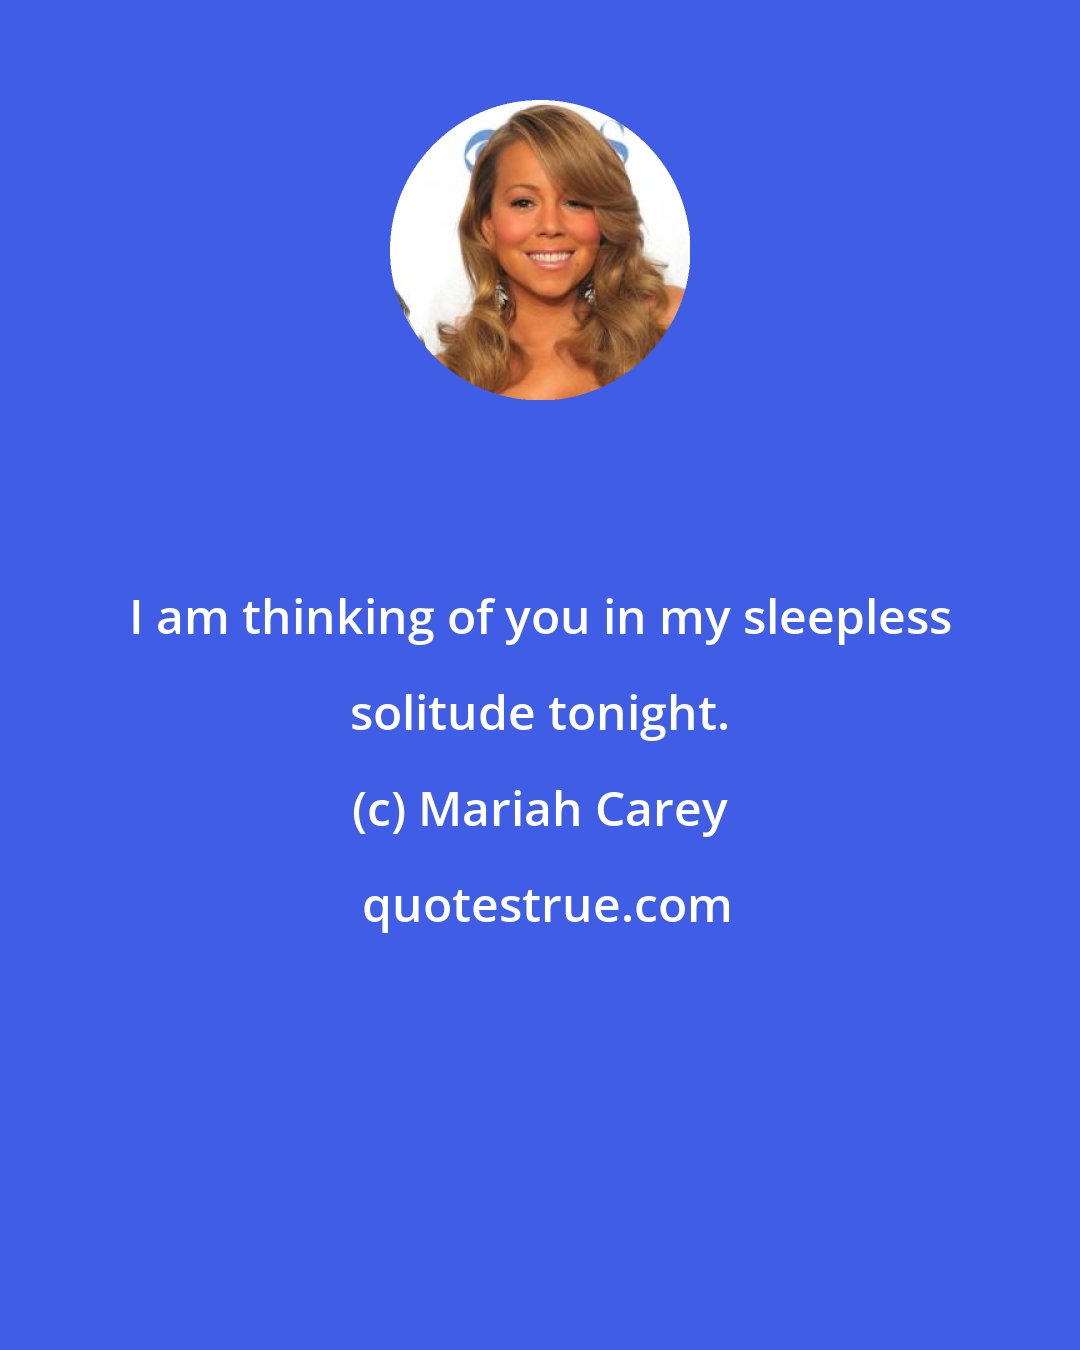 Mariah Carey: I am thinking of you in my sleepless solitude tonight.